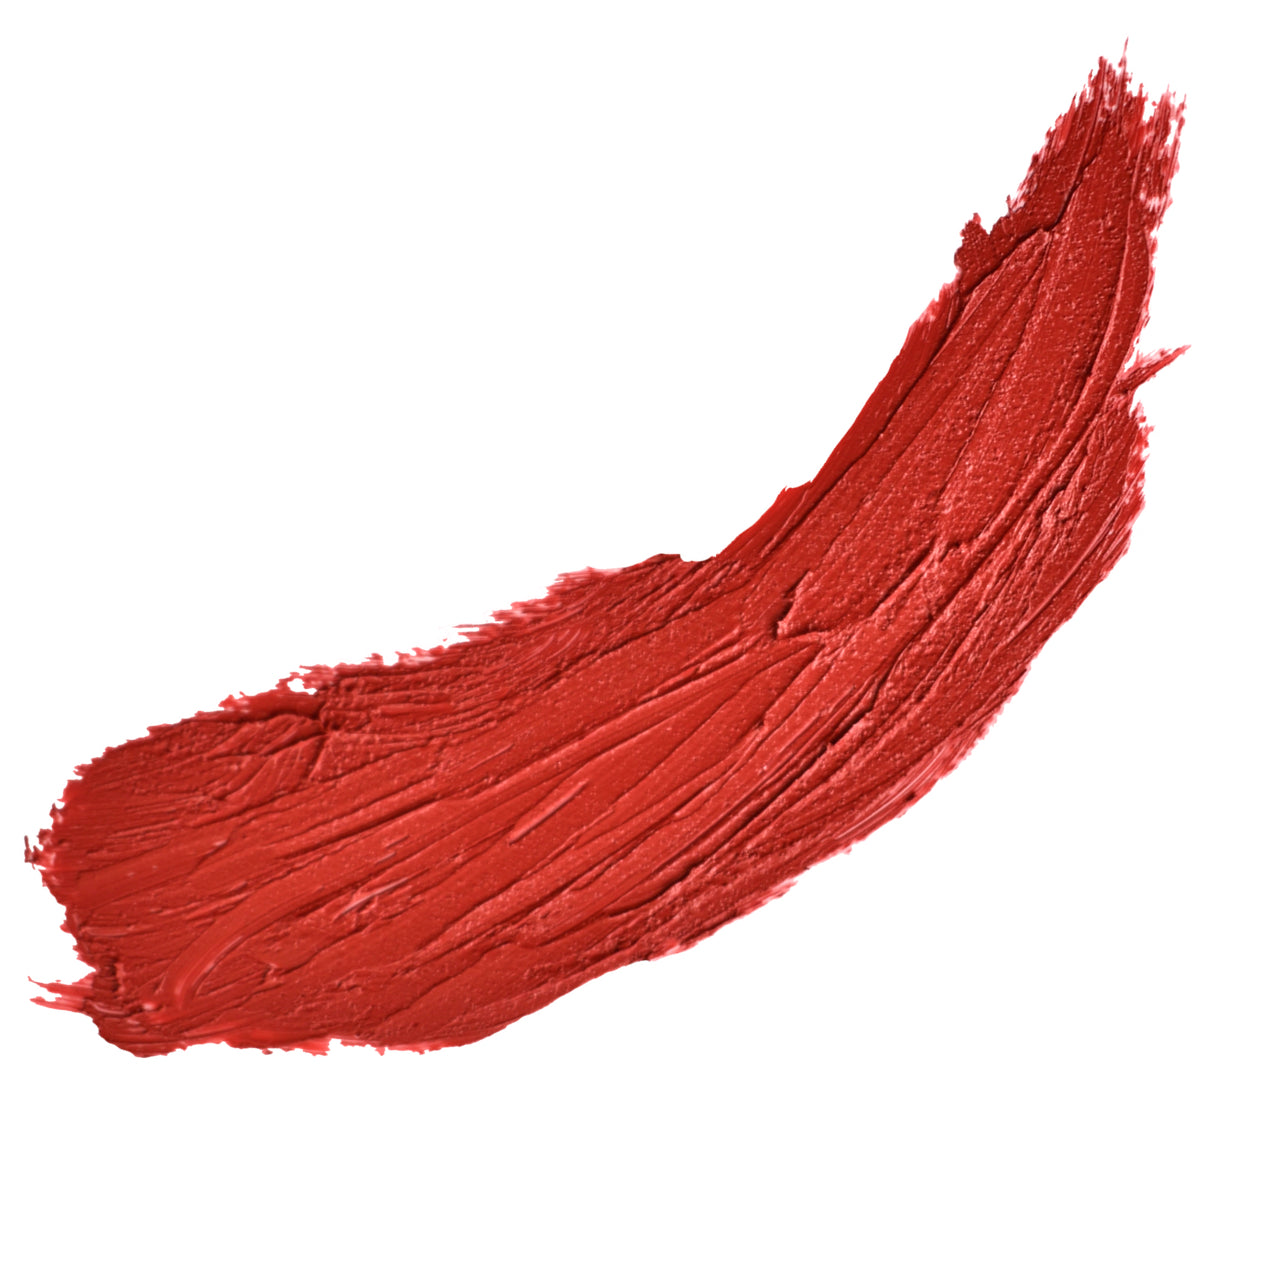 Brick Red - Rich Orange Red Organic Long Lasting Lipstick